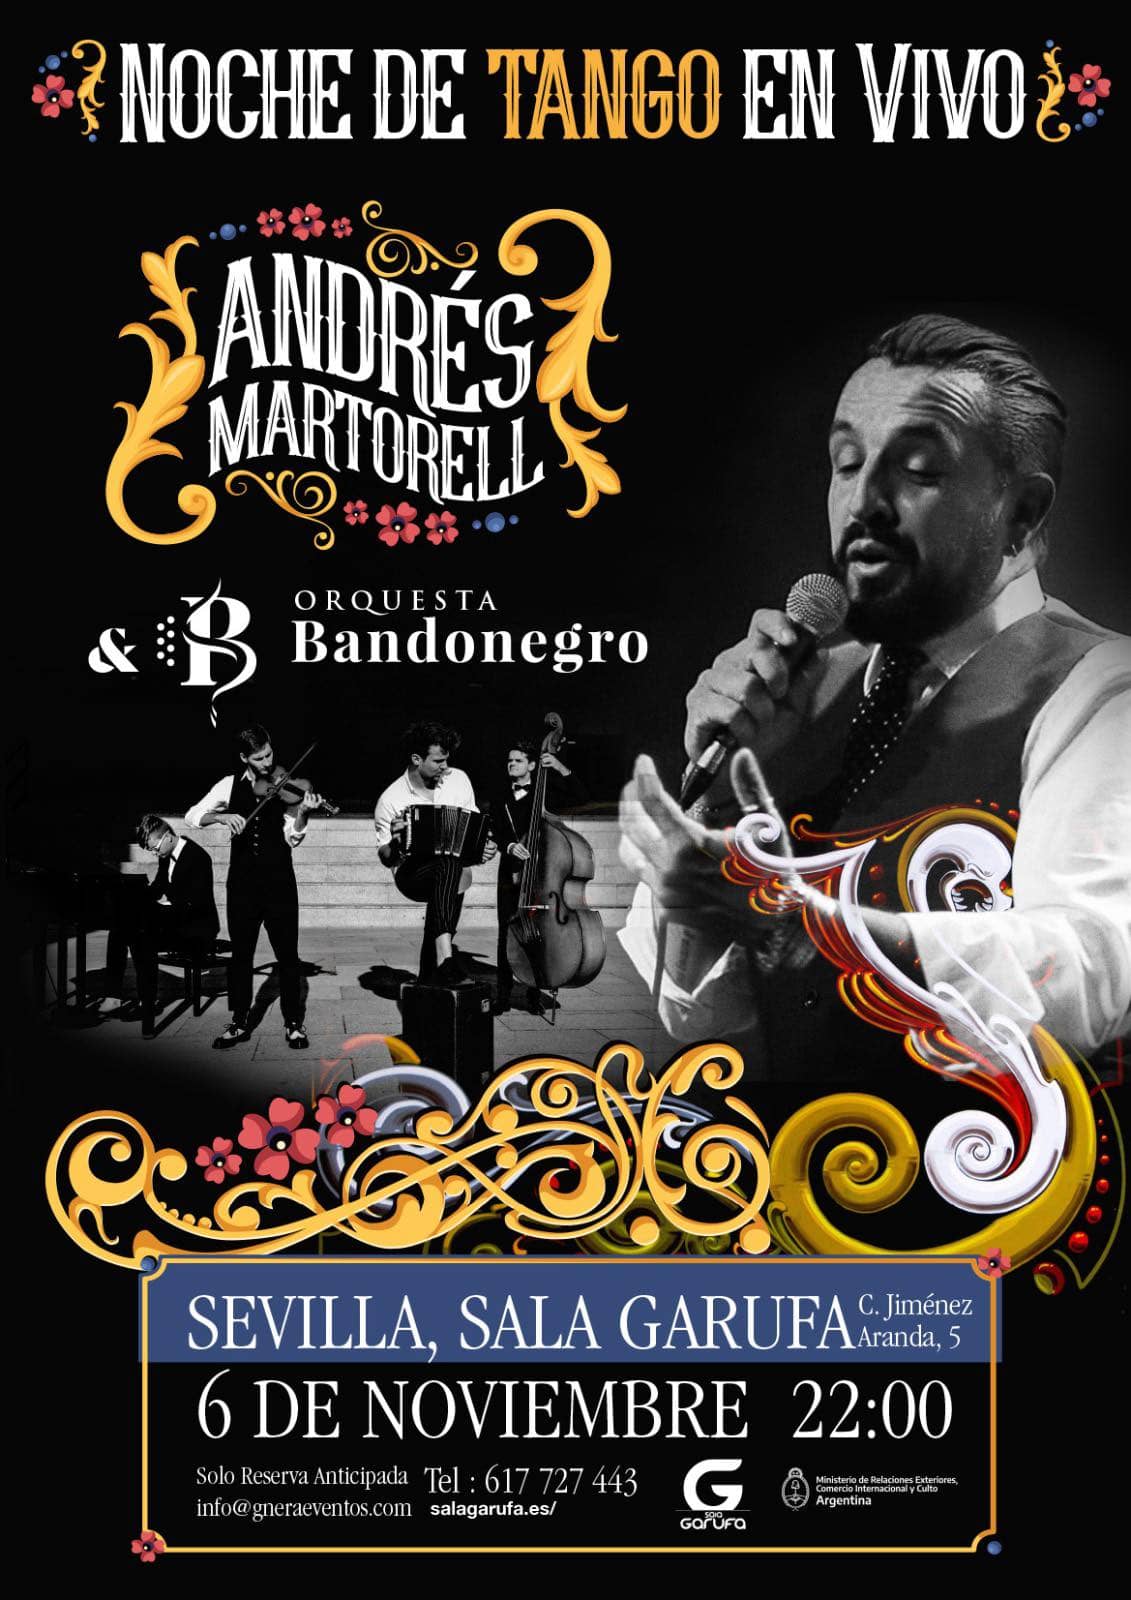 Bandonegro & Andres Martorell